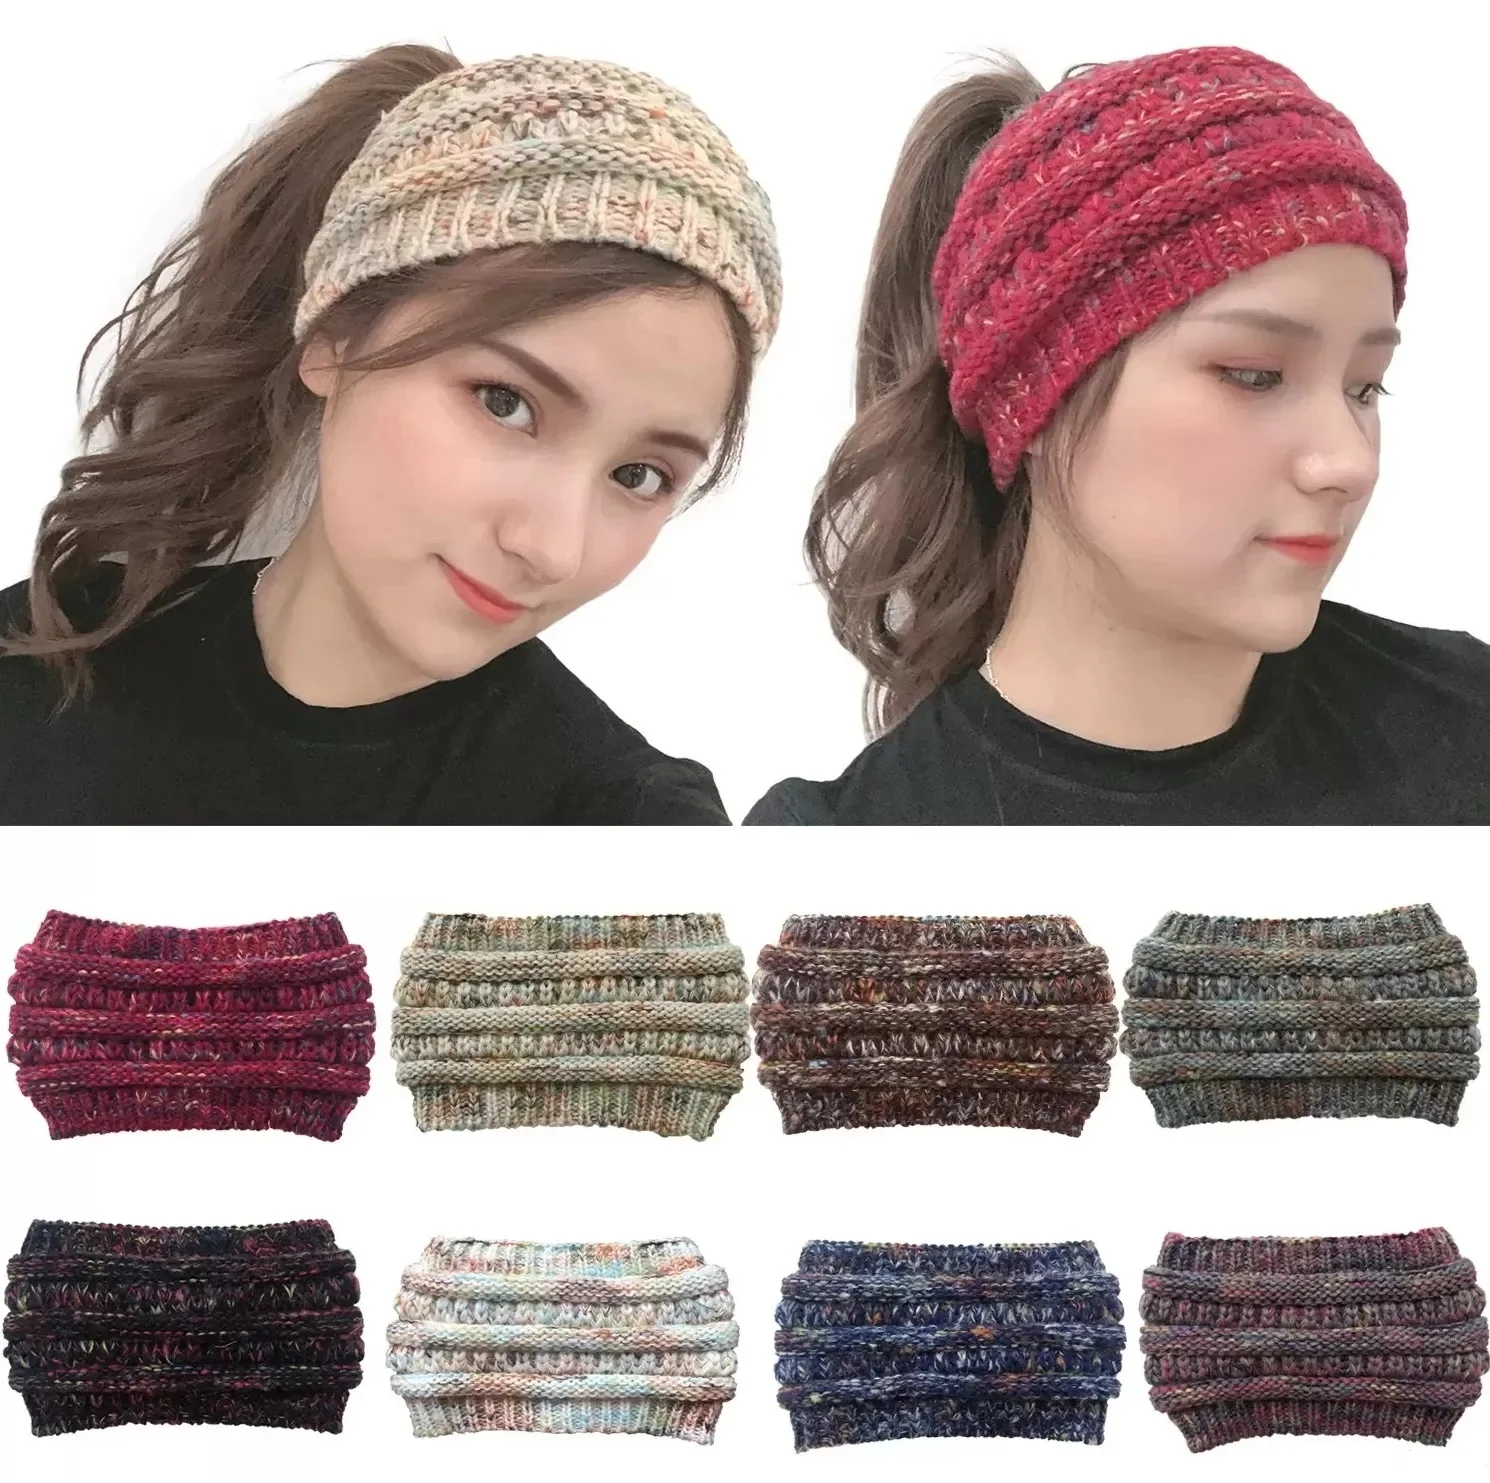 

Knitted Headbands Women Winter Headwrap Hairband Crochet Turban Head Band Wrap Colorful Ear Warm Headband Hair Accessories